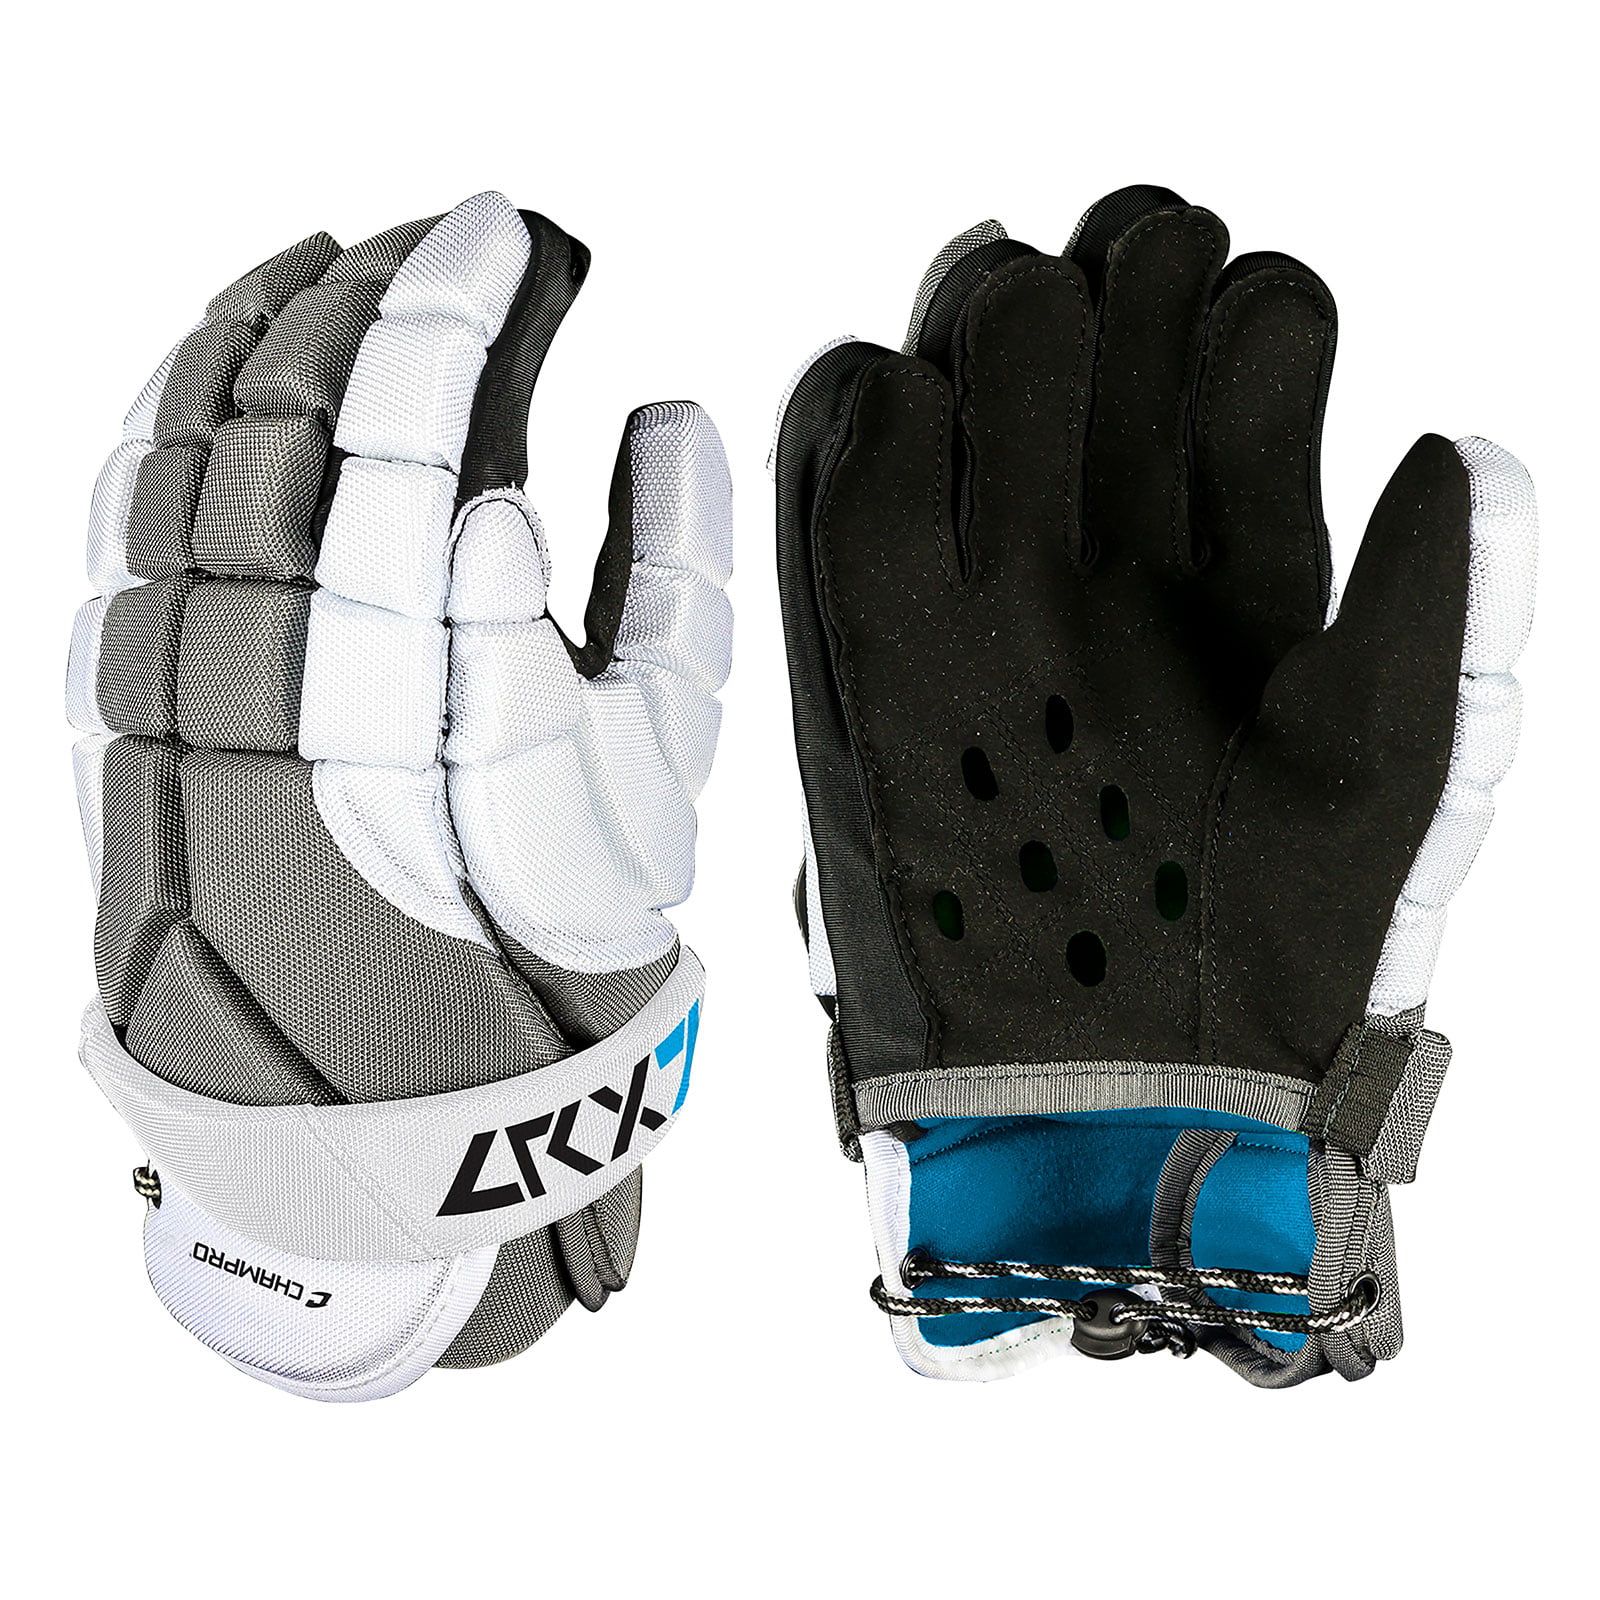 NEW Set of Warrior Riot Lacrosse Black/White Switch Cuff Glove Accessory 